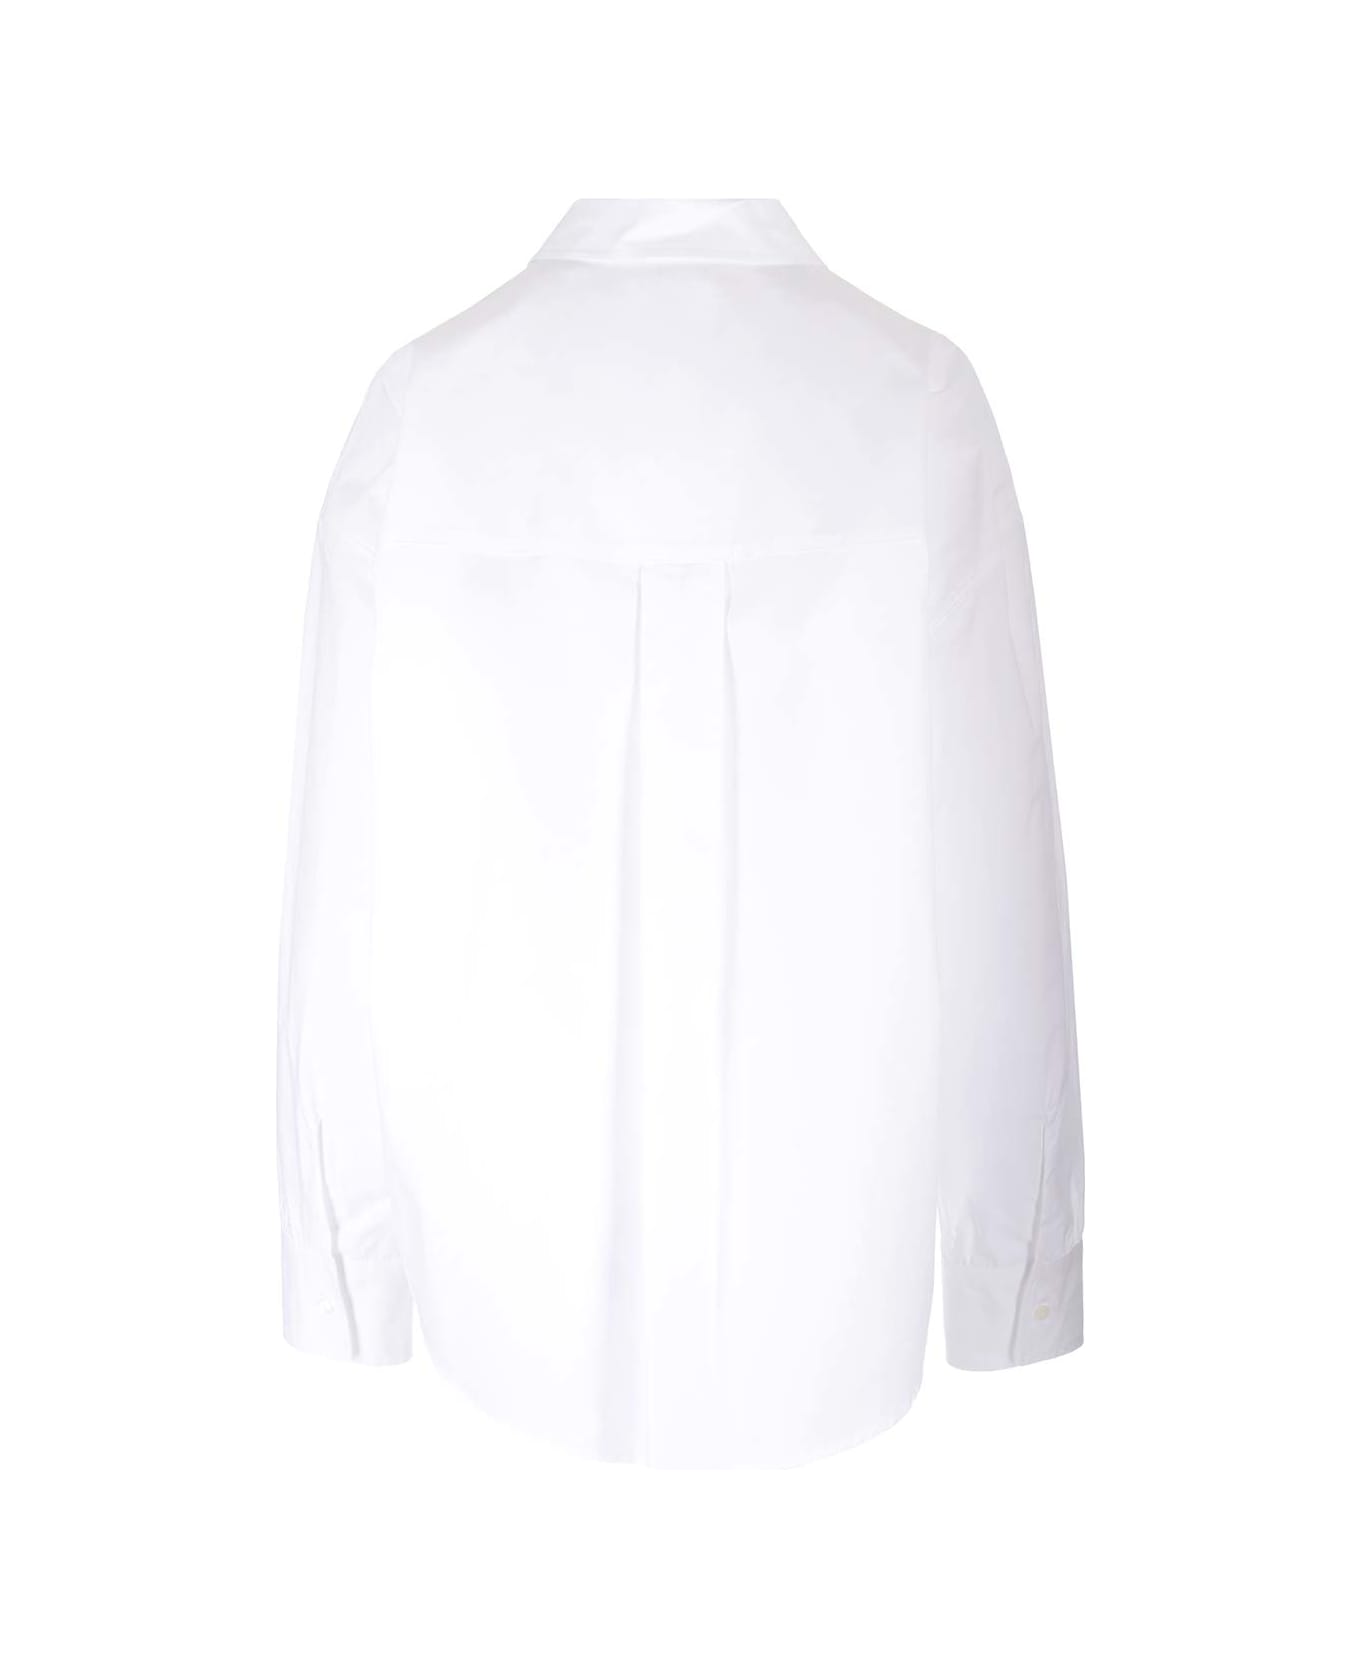 Parosh White Cotton Shirt - Bianco